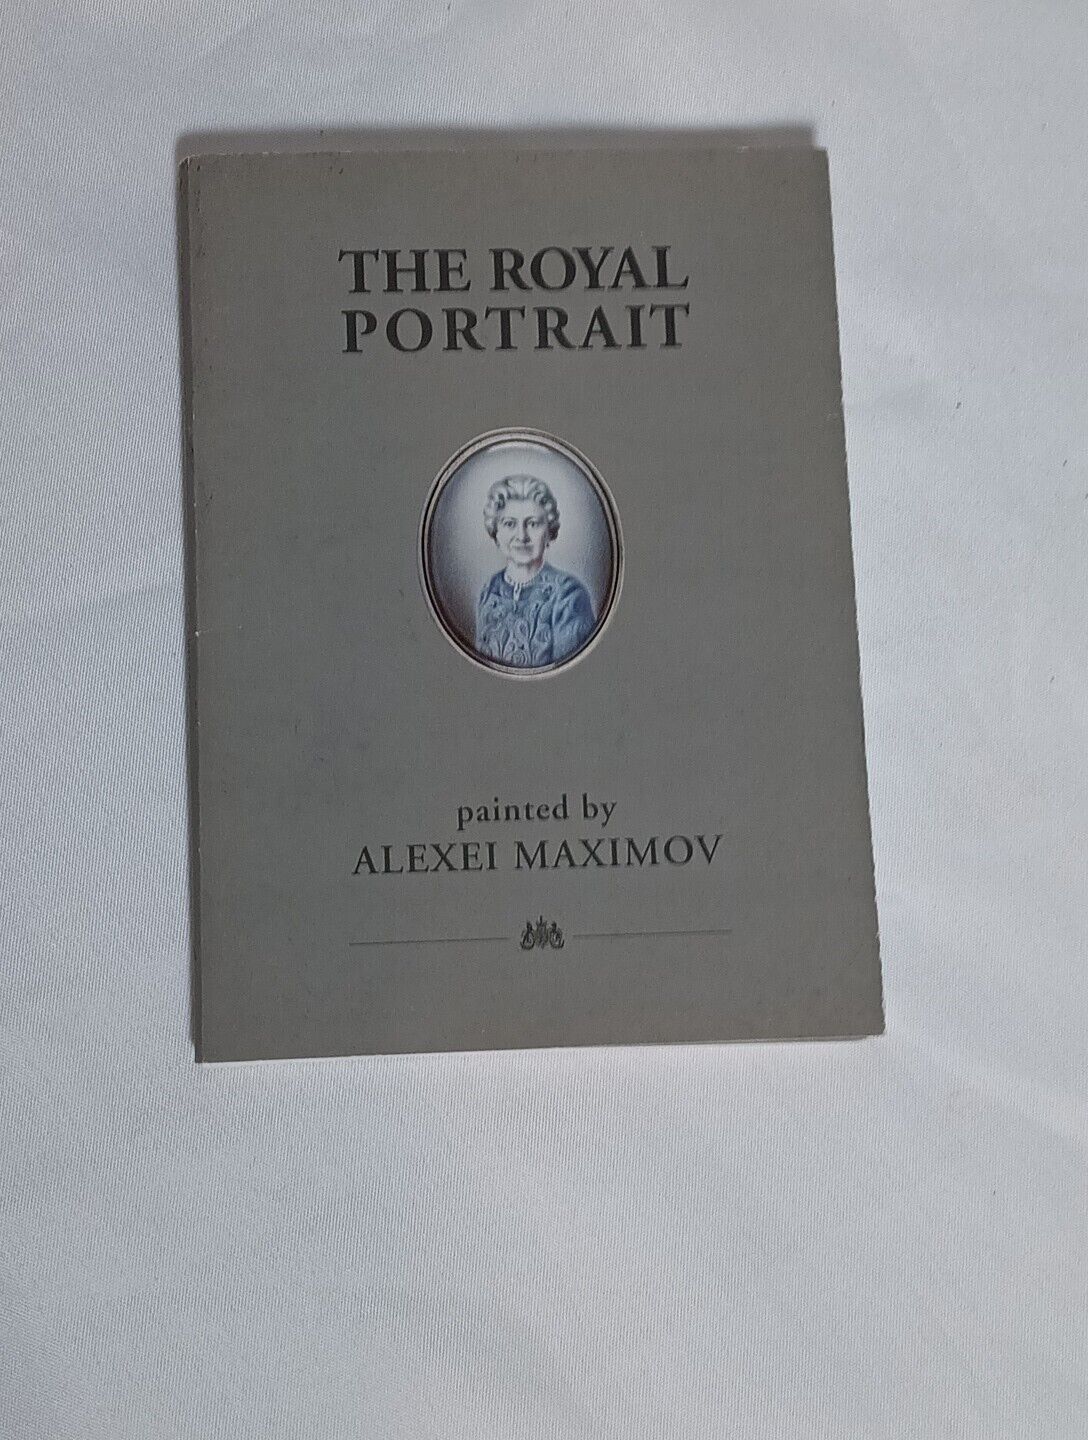 The Royal Portraits 7 Posttcards Queen Elizabeth By Alexei Maximov